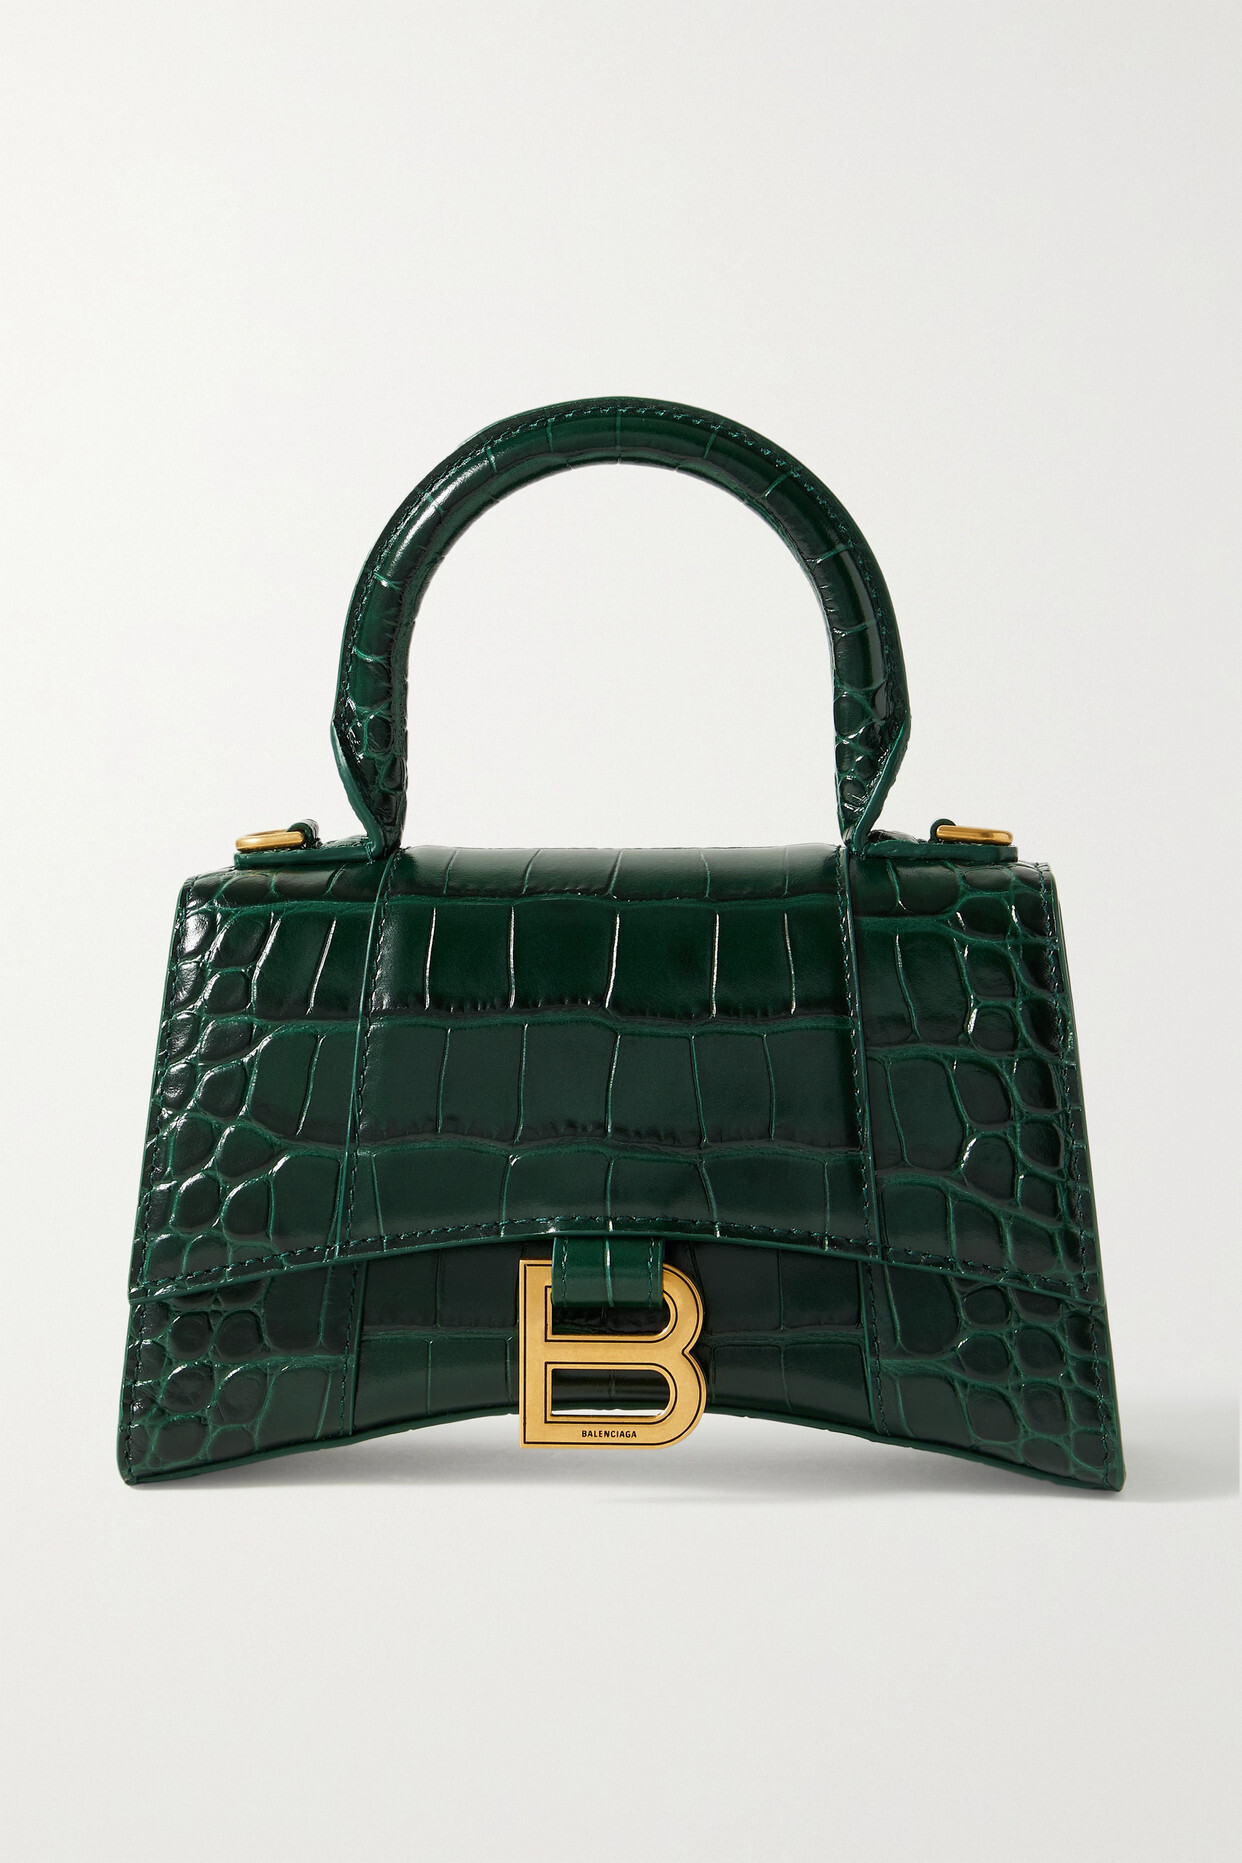 Balenciaga - Hourglass Xs Croc-effect Leather Tote - Green